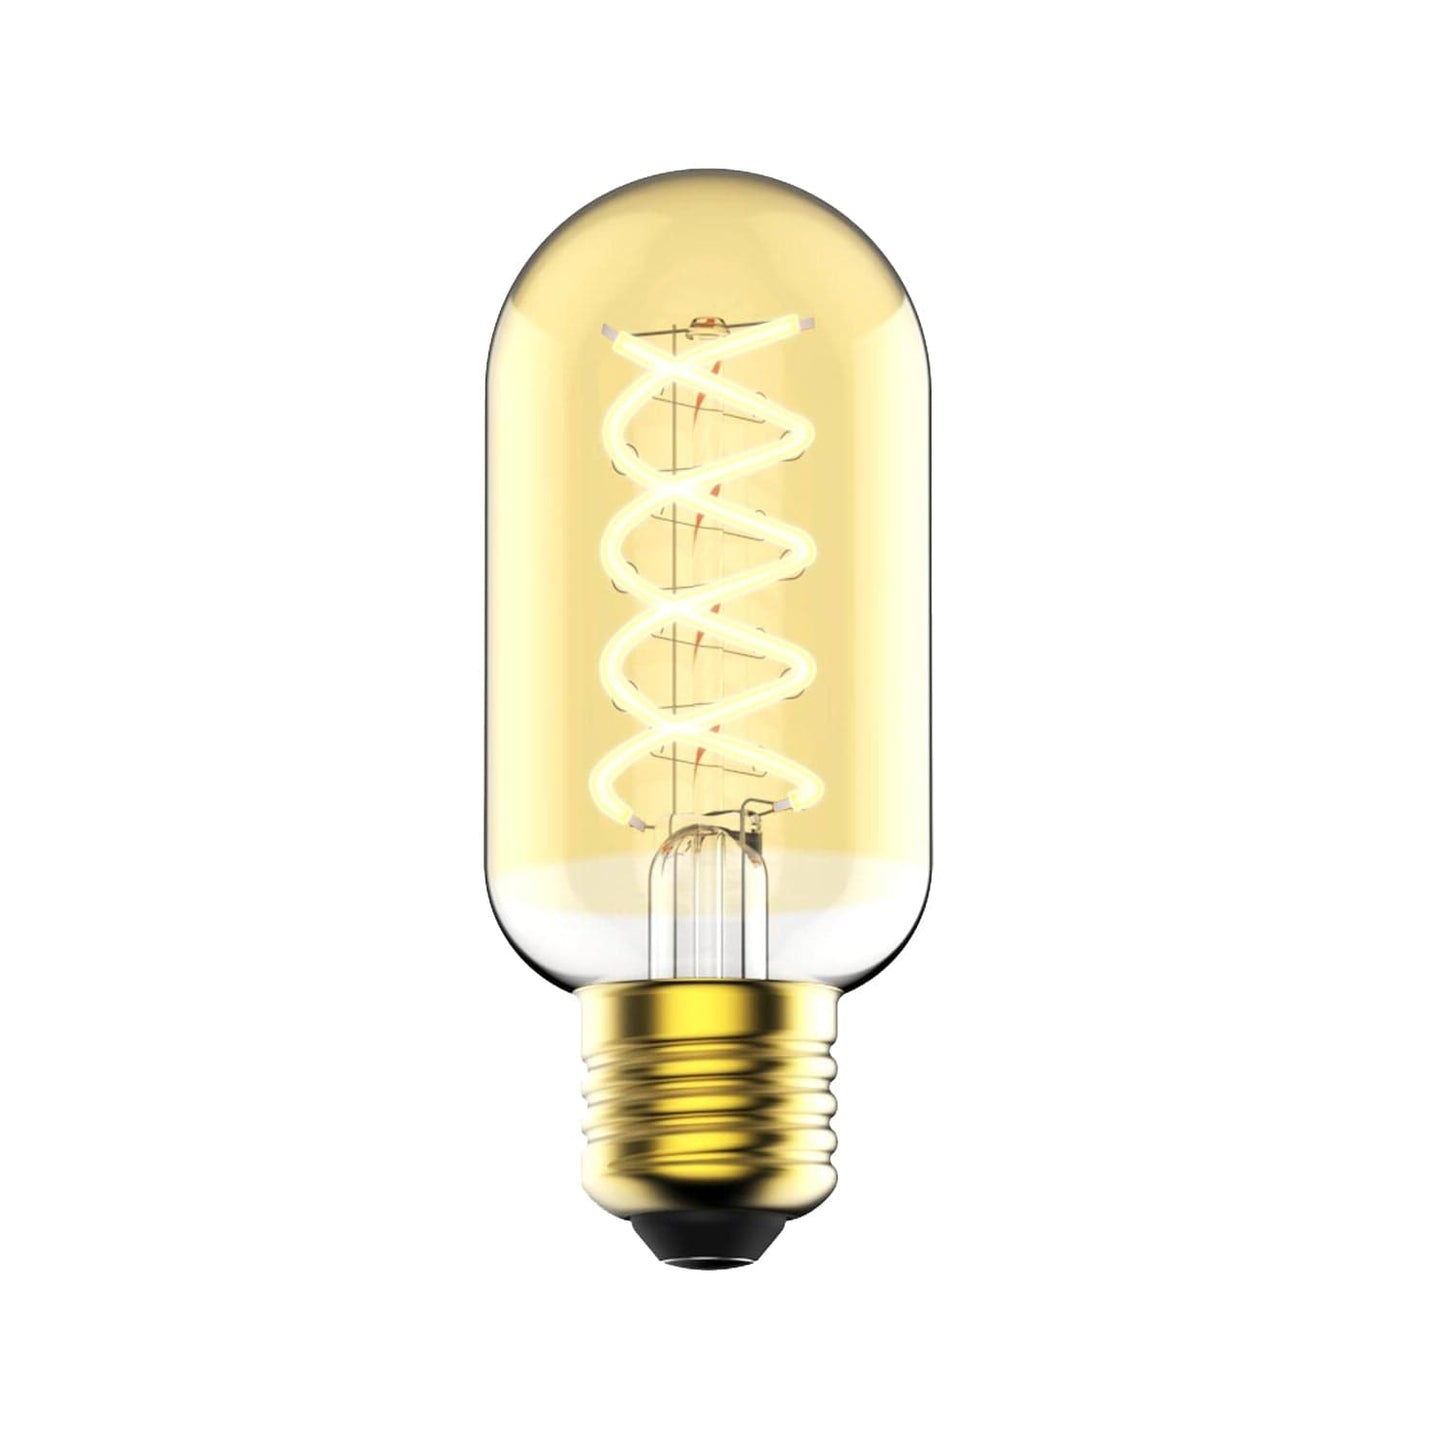 Heavenly Chandeliers Light Bulbs Dimmable Decorative E27 Spiral Light Bulb